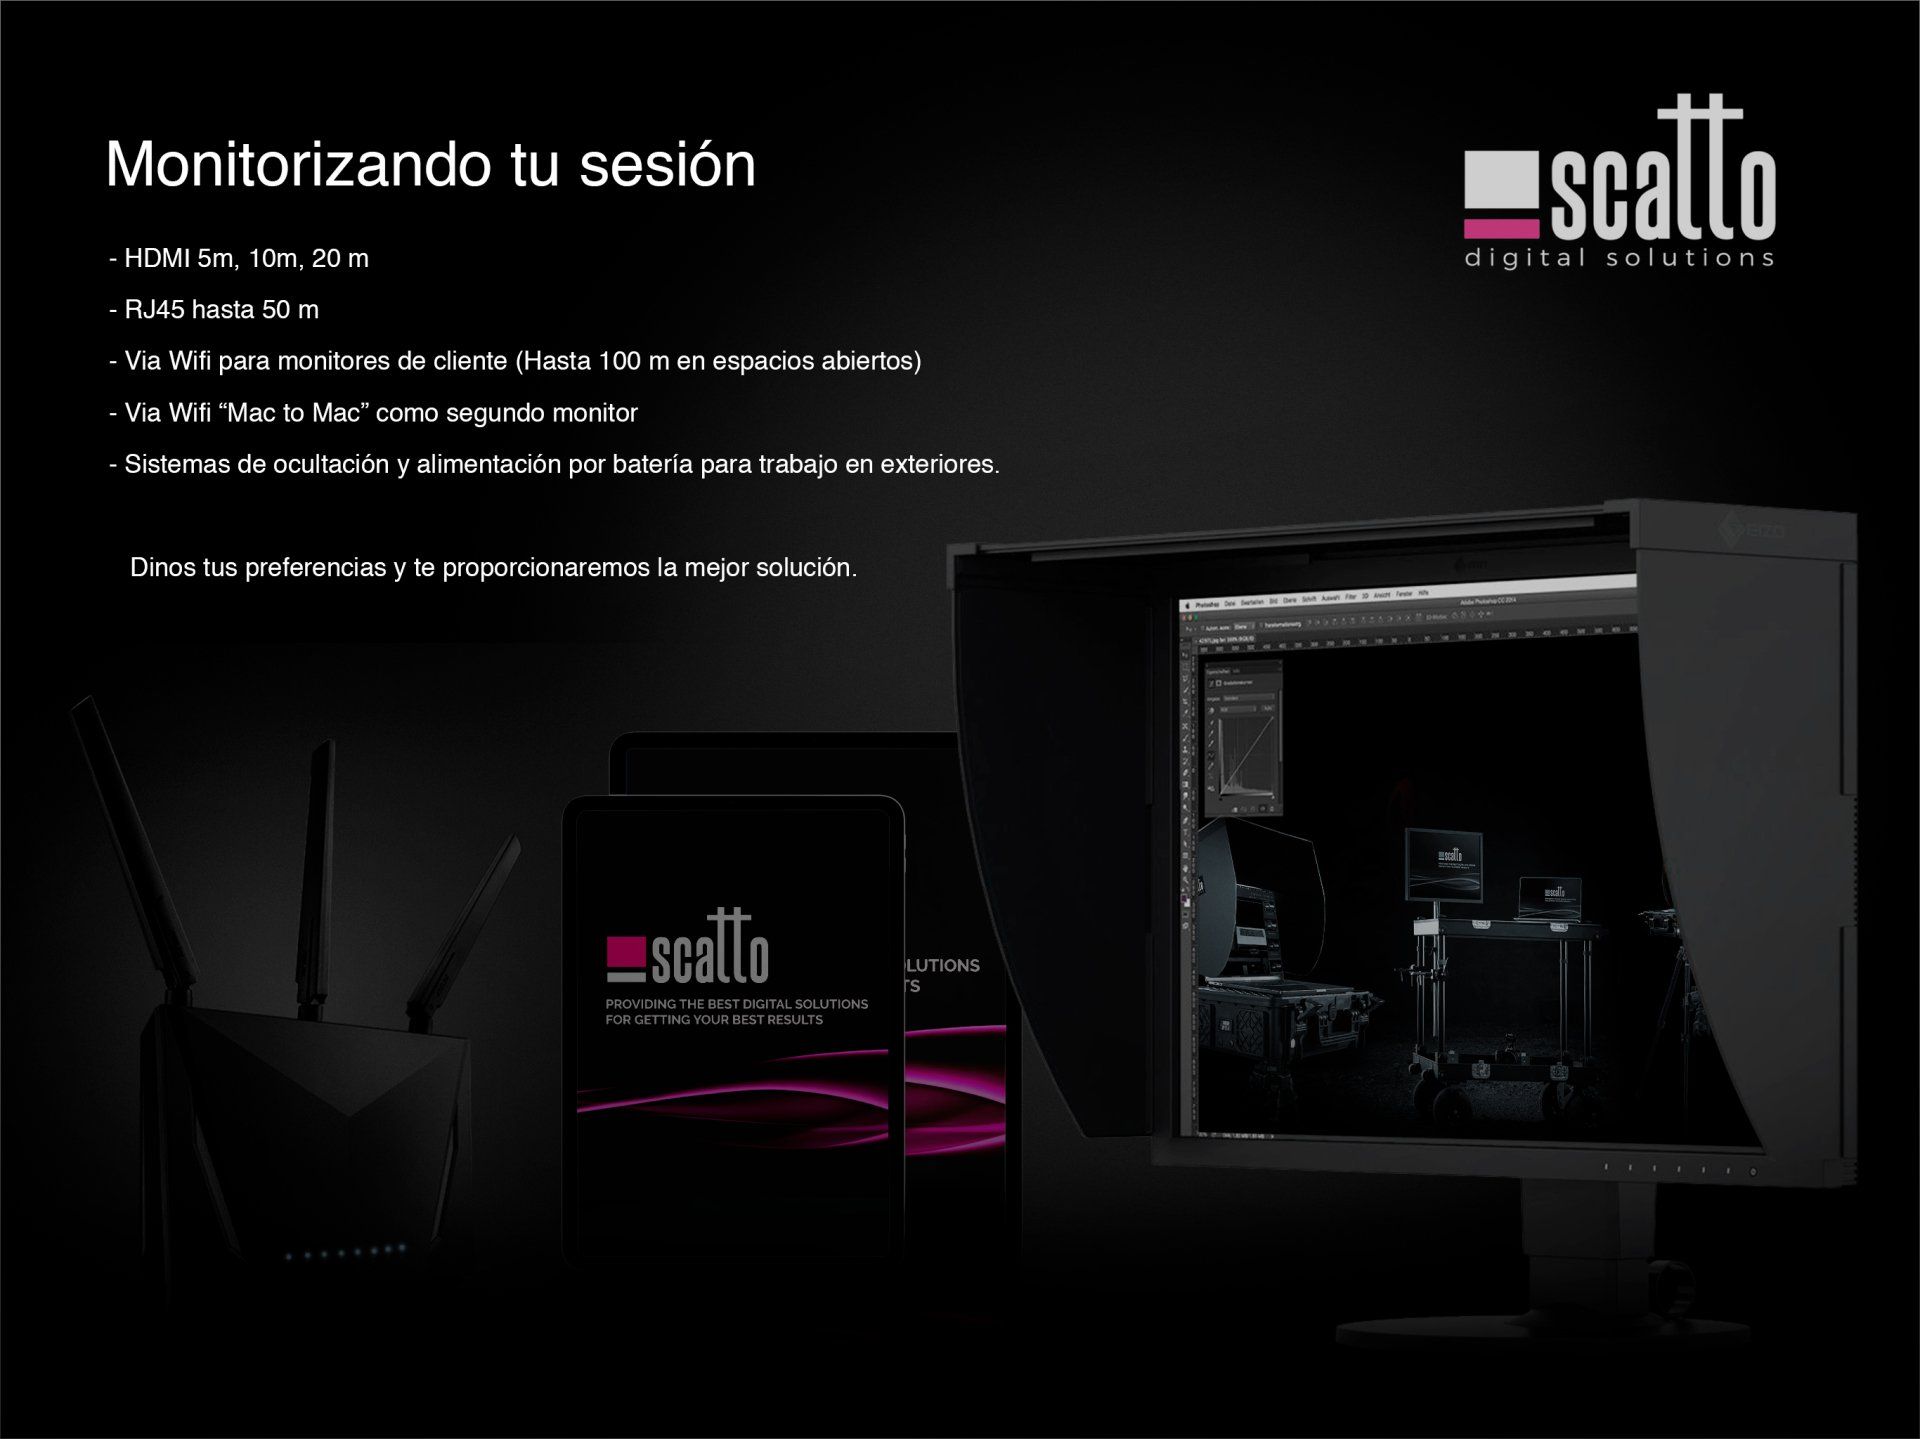 Monitores On Set & Scatto Digital Solutions & Digital Tech & Rental Digital Madrid Spain